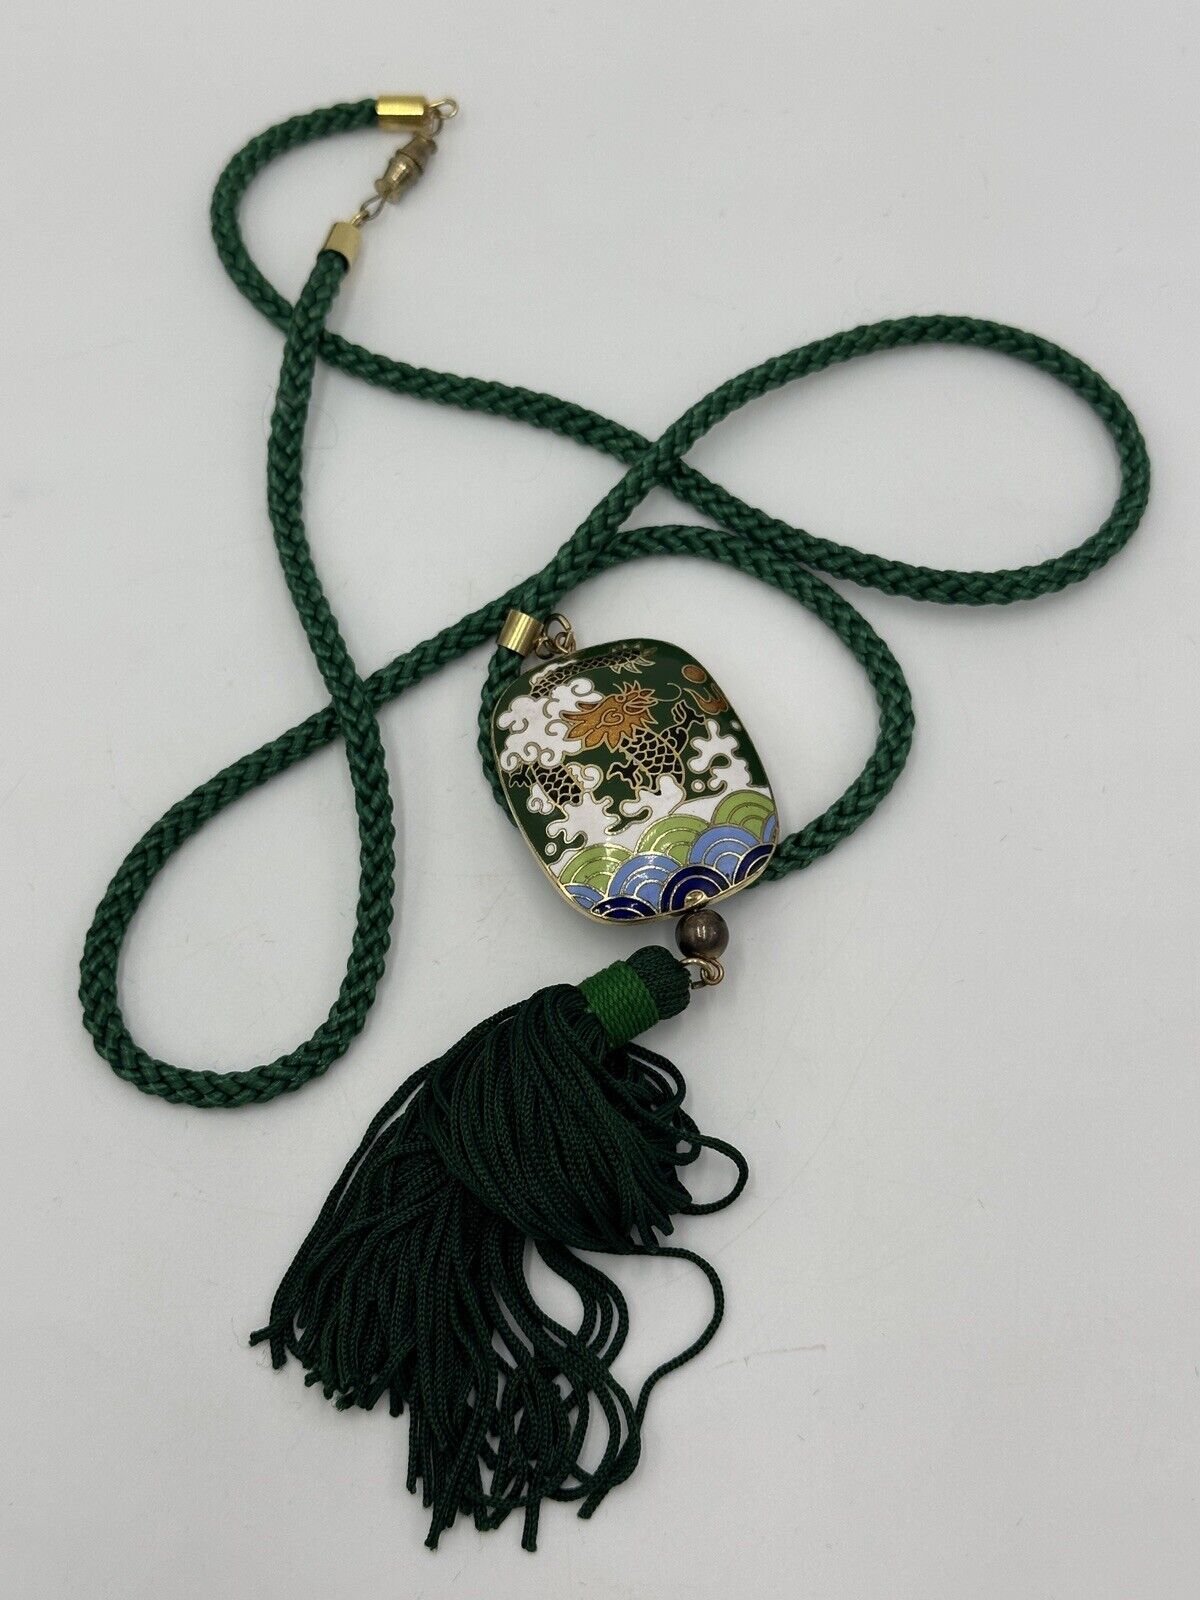 Necklace Tasseled Enamel Pendant Asian Dragon Design Gold Tone Vintage Green